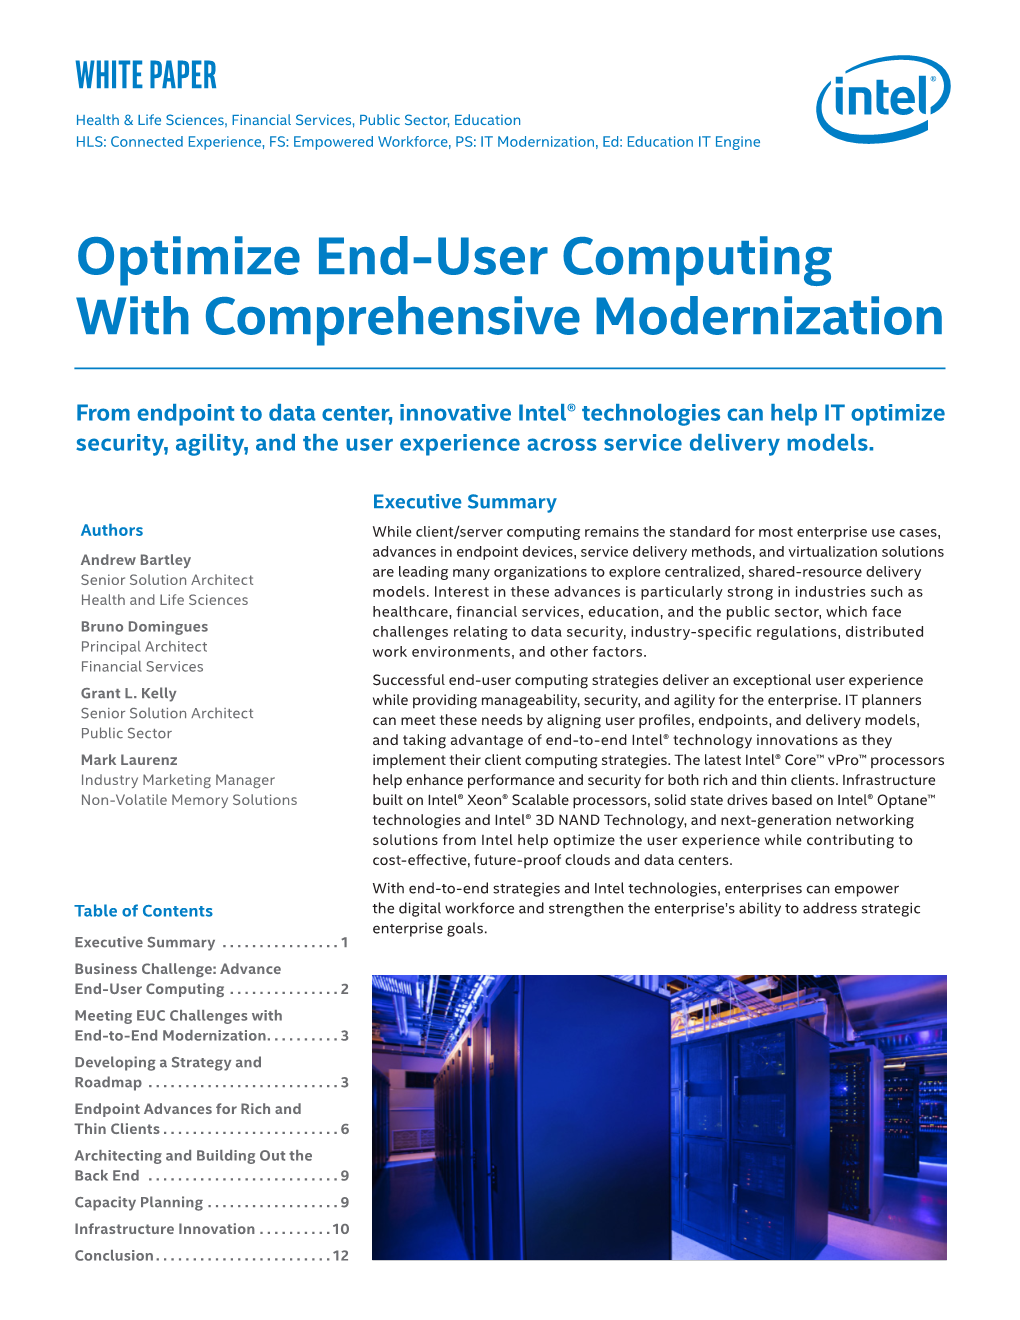 Optimize End-User Computing with Comprehensive Modernization